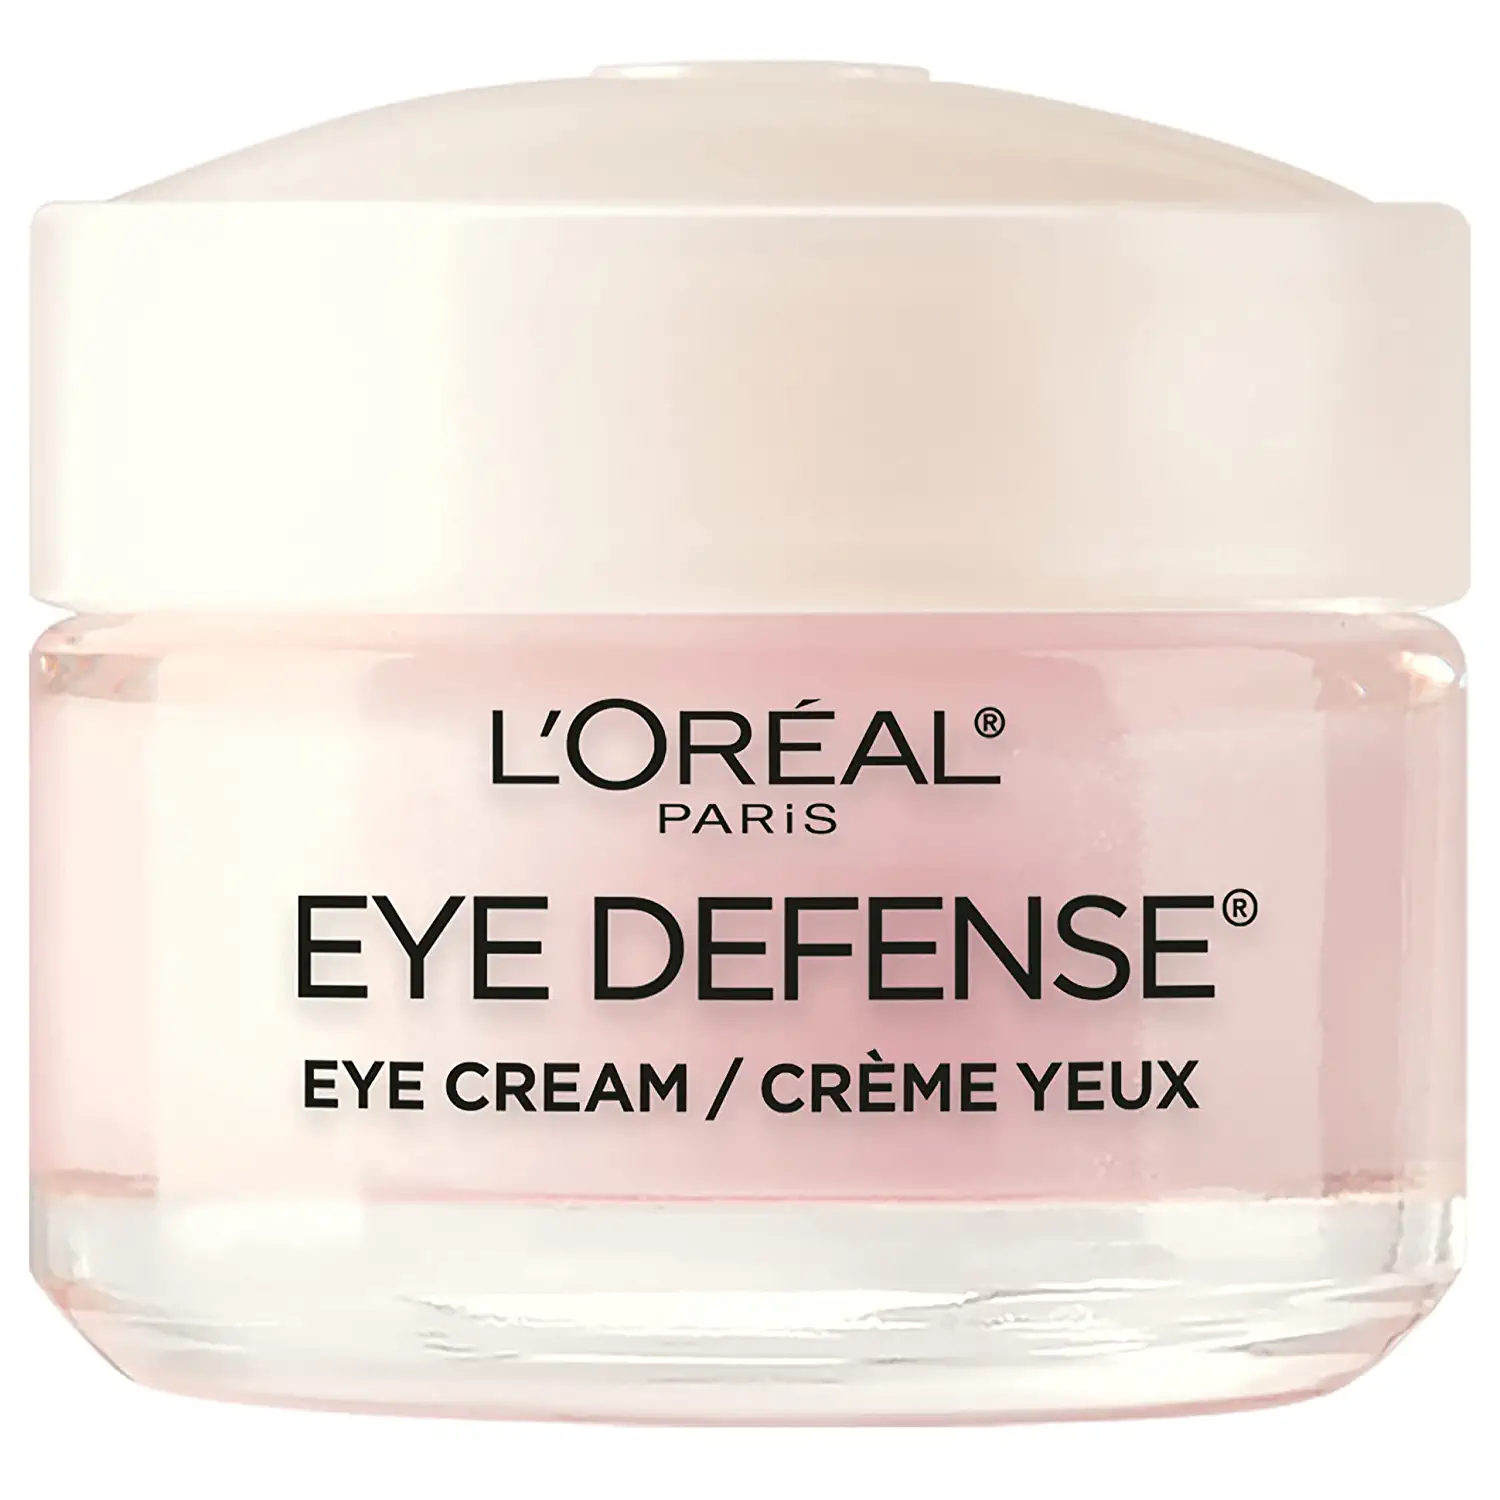 L’Oreal Paris Fragrance-Free Lightweight Eye Cream